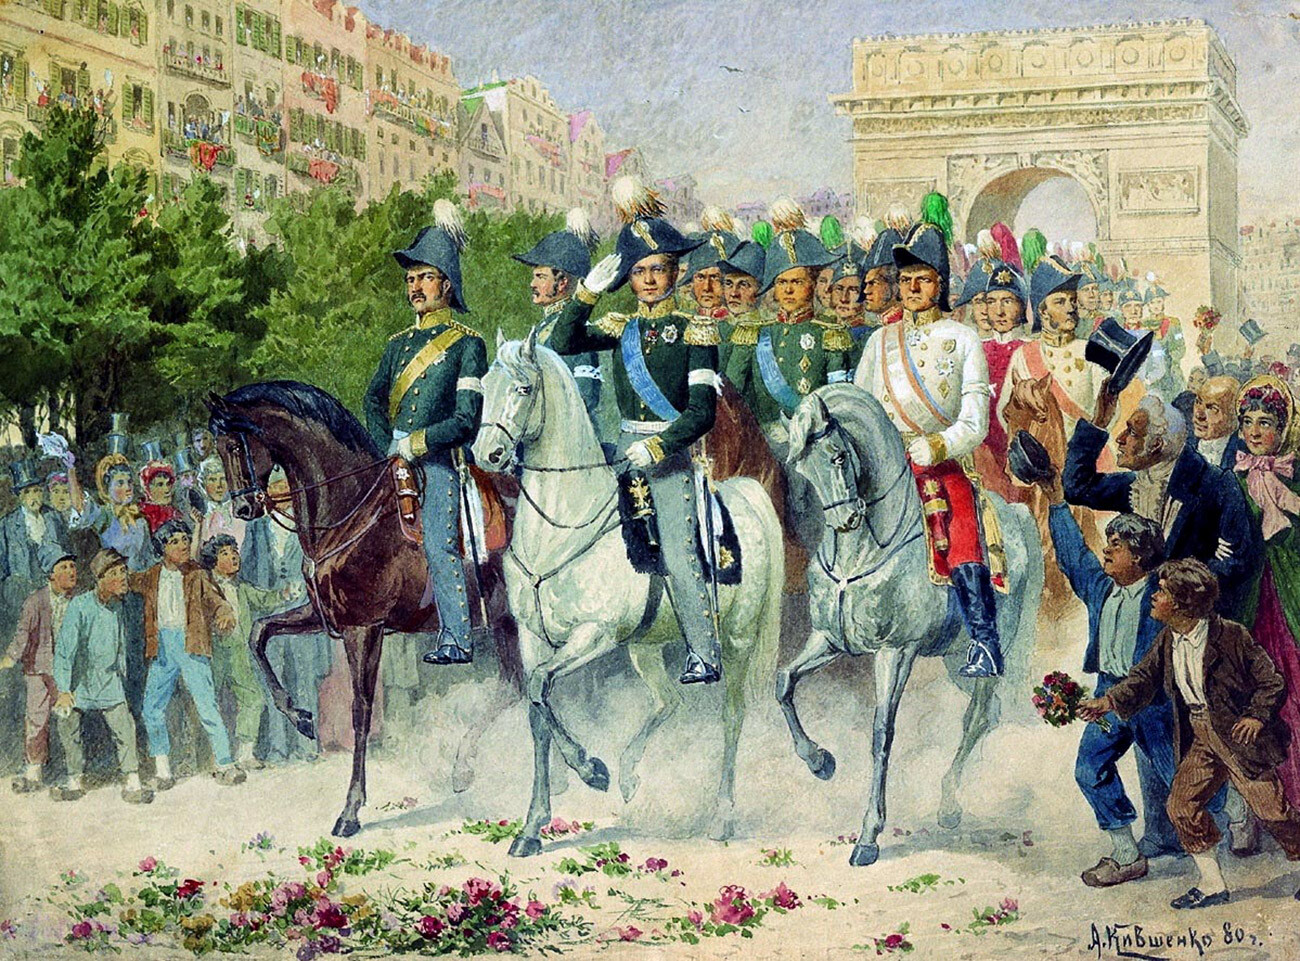 “Le truppe russe entrano a Parigi nel 1814”